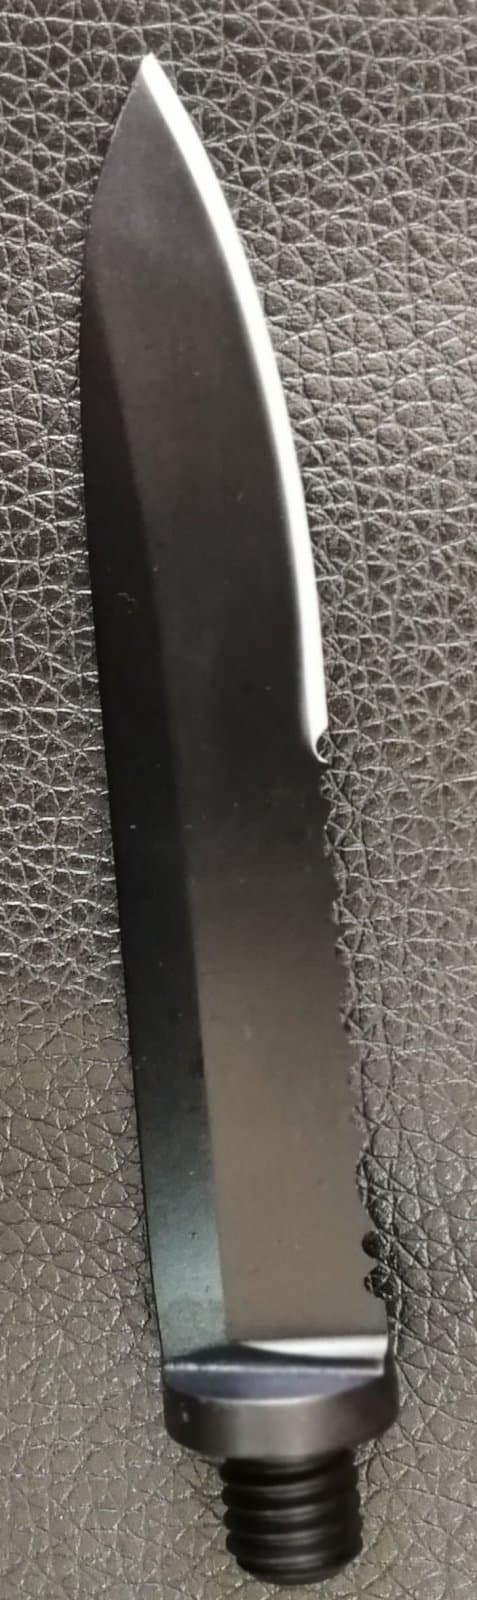 knife grip blade